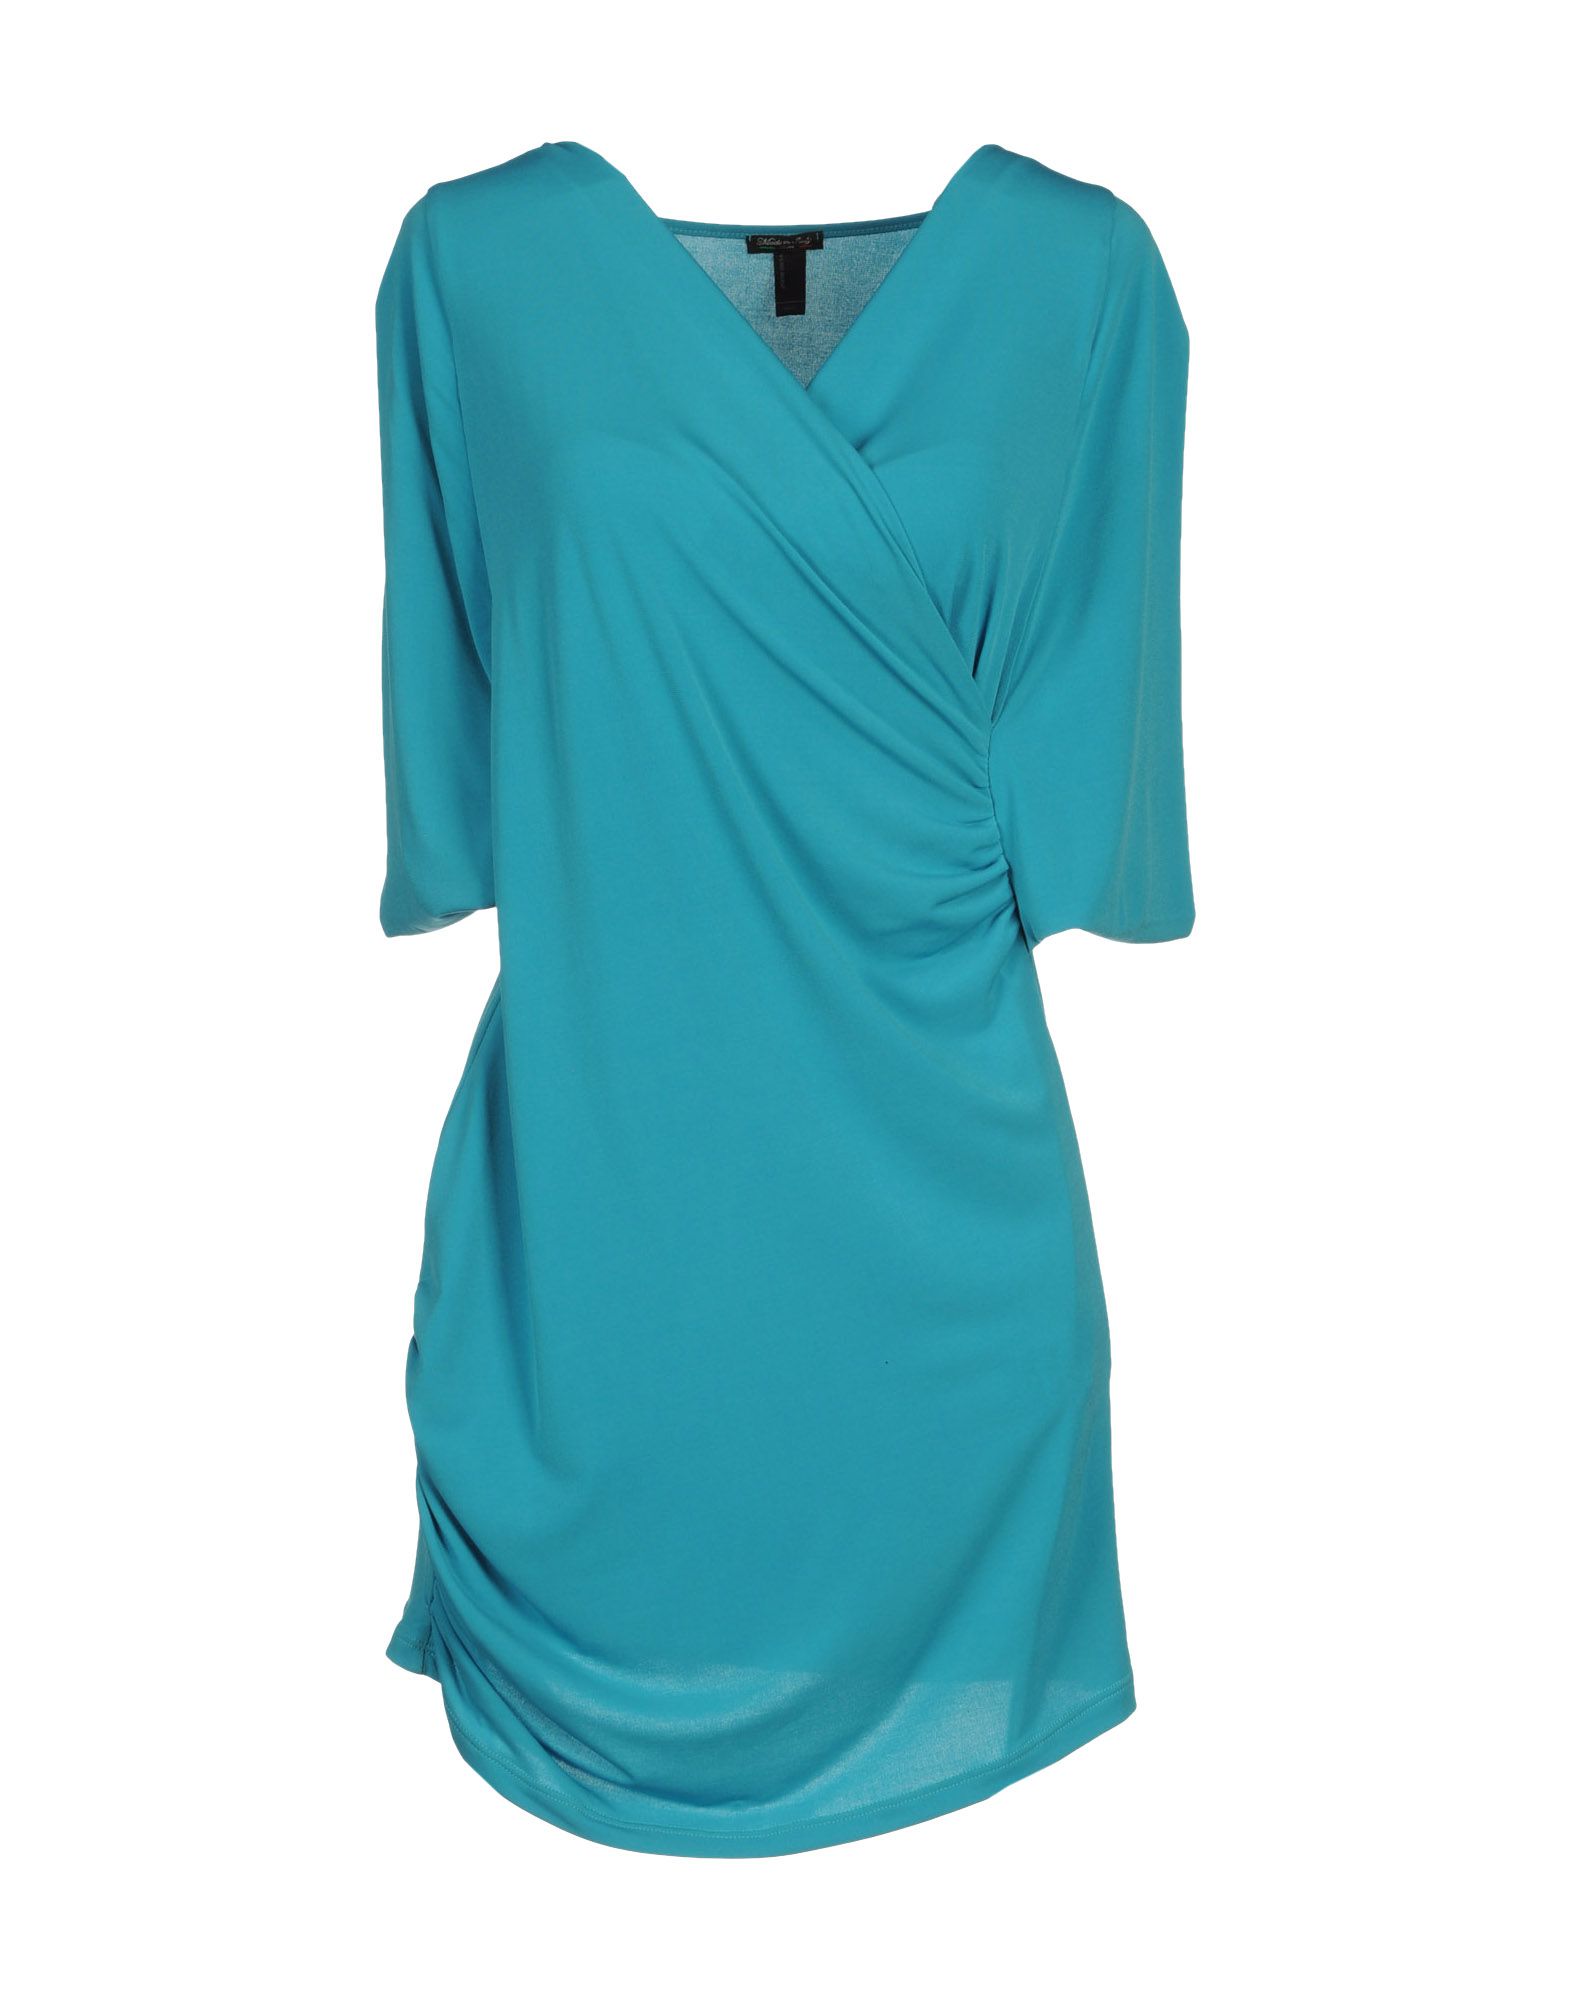 Lyst - Vero Moda Short Dress in Blue